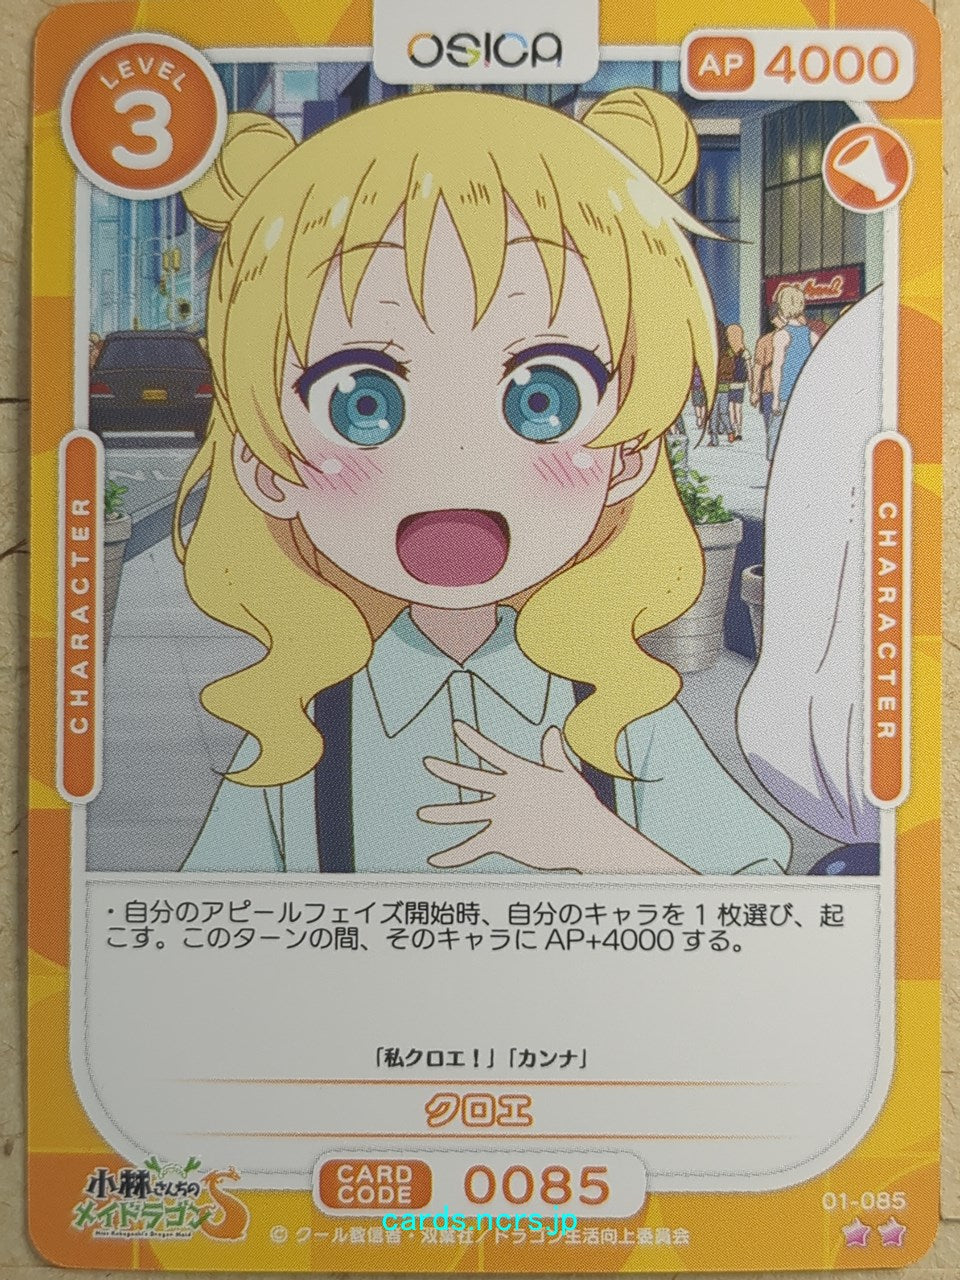 OSICA Miss Kobayashi's Dragon Maid  Trading Card OS/KOB-01-085